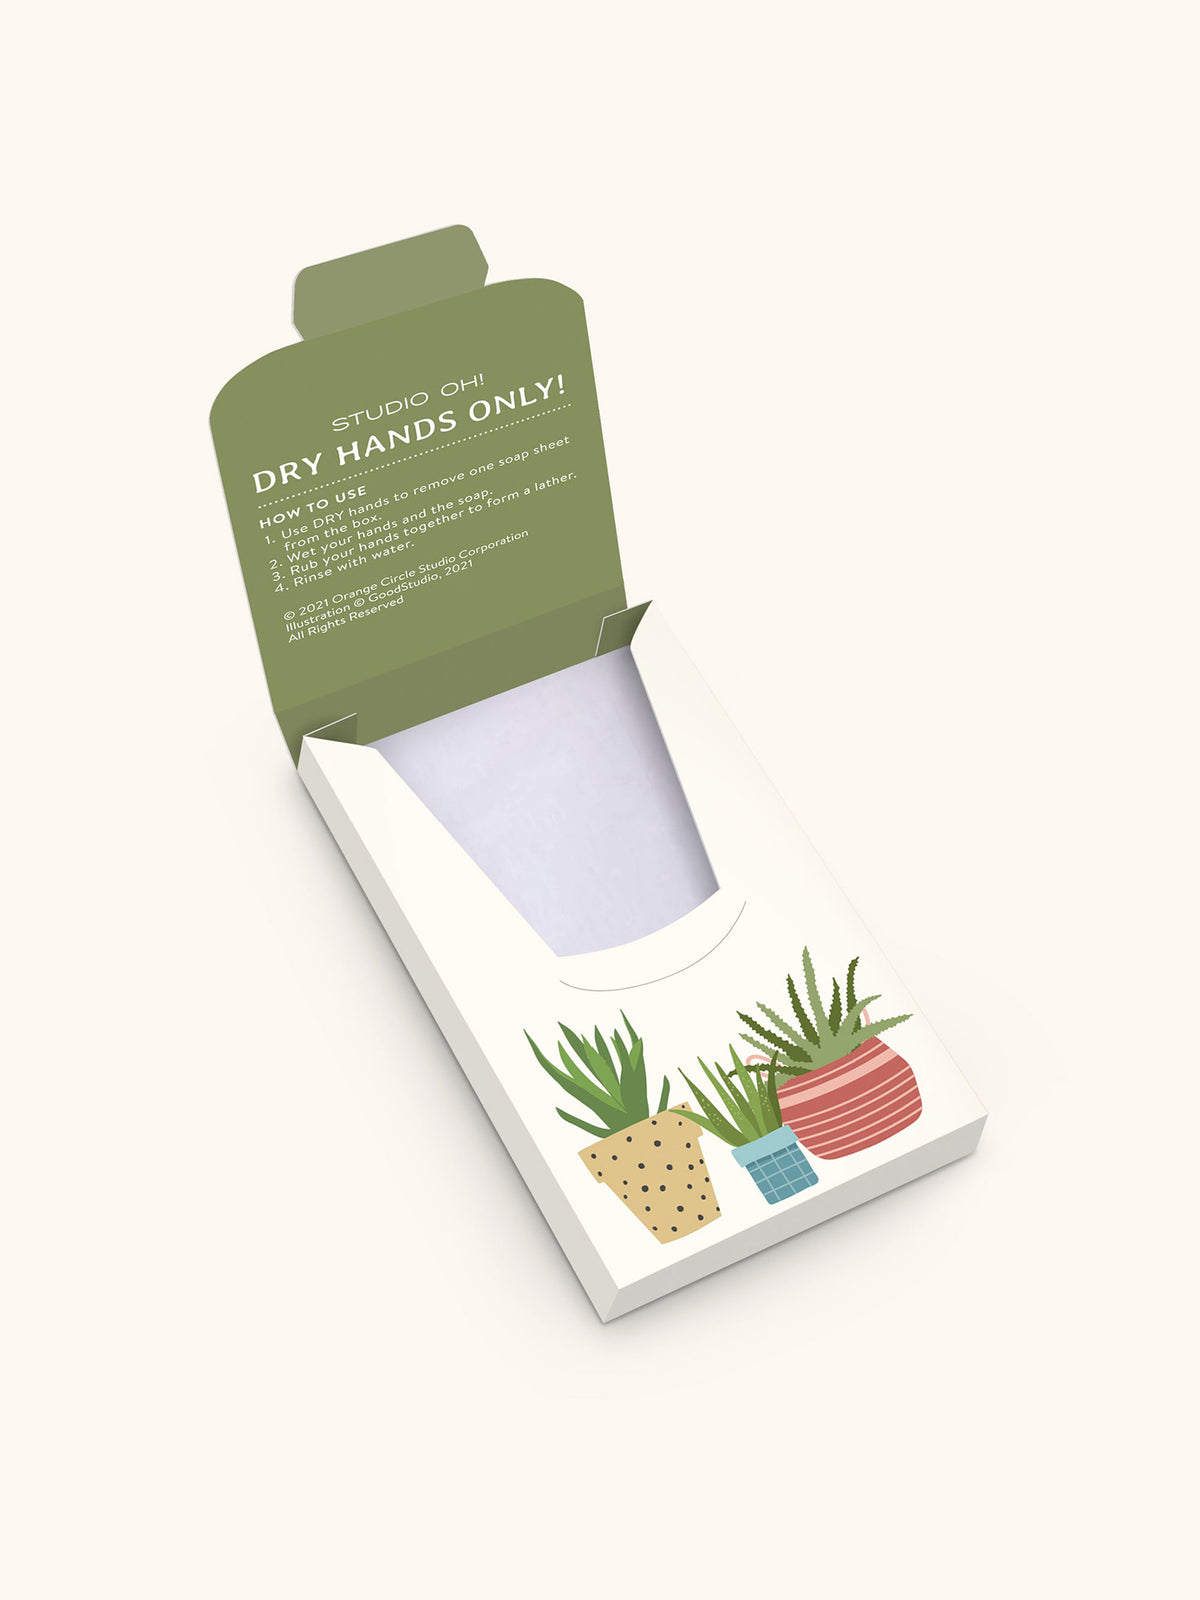 Plant Addict Single-Use Soap Sheets